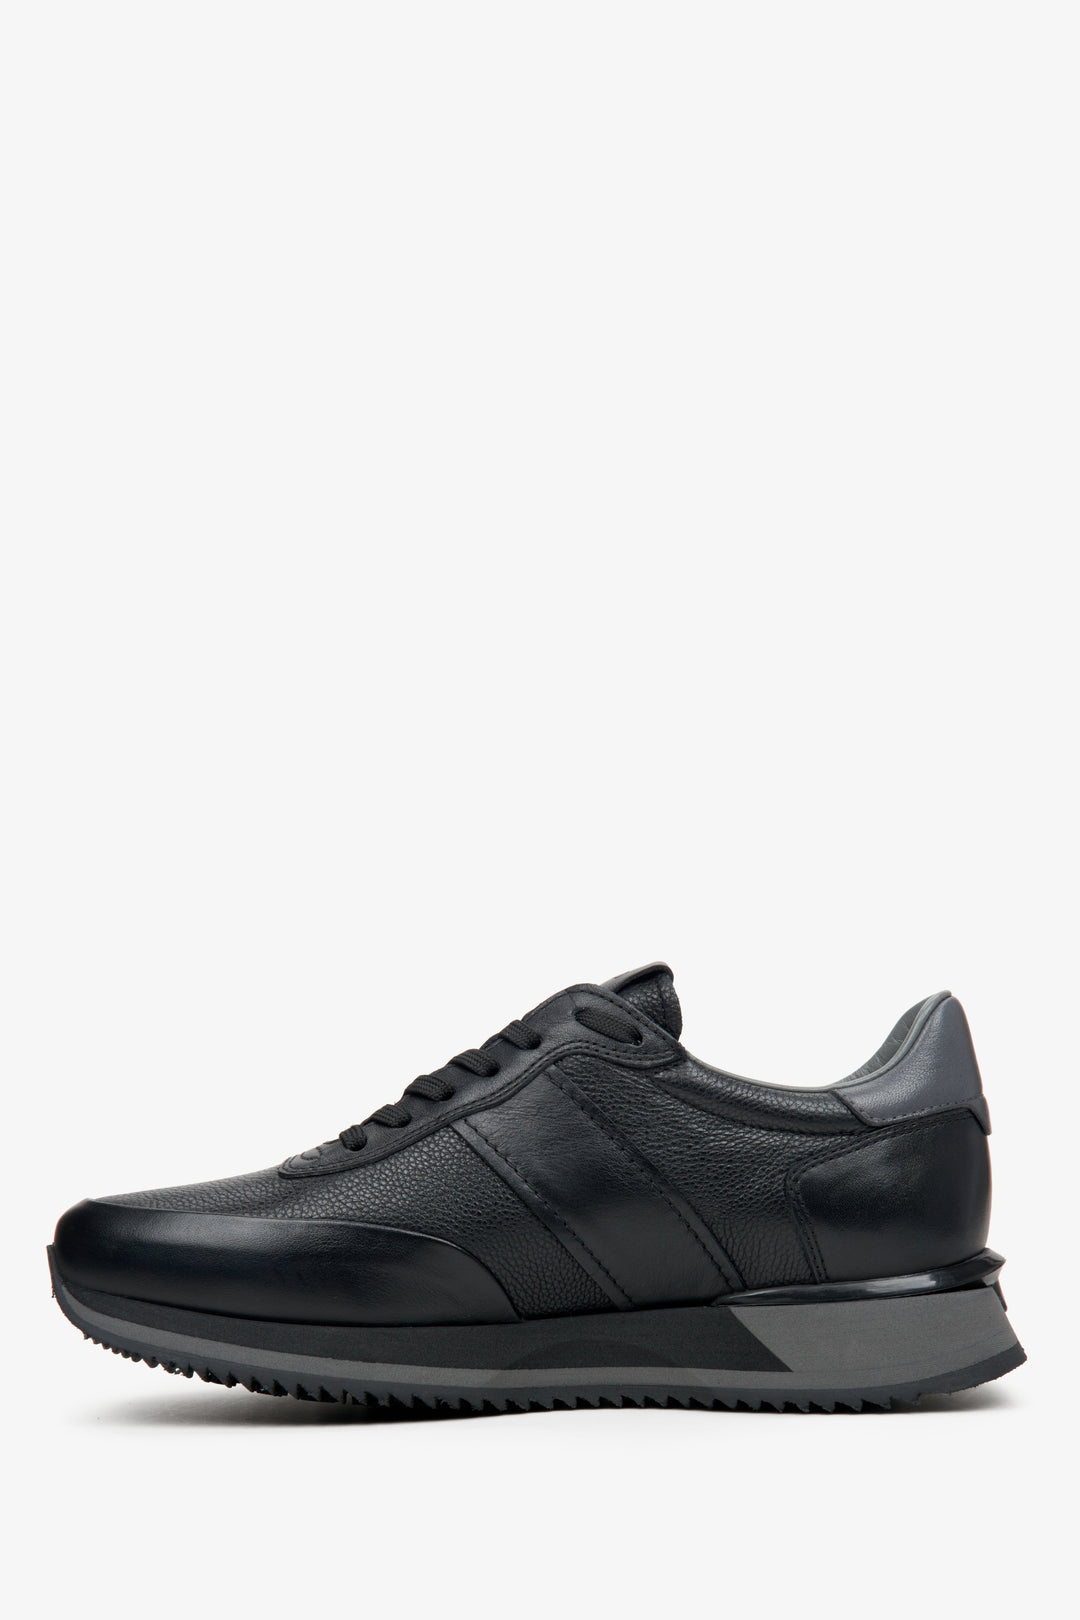 Men's low top black sneakers by Estro - shoe profile.